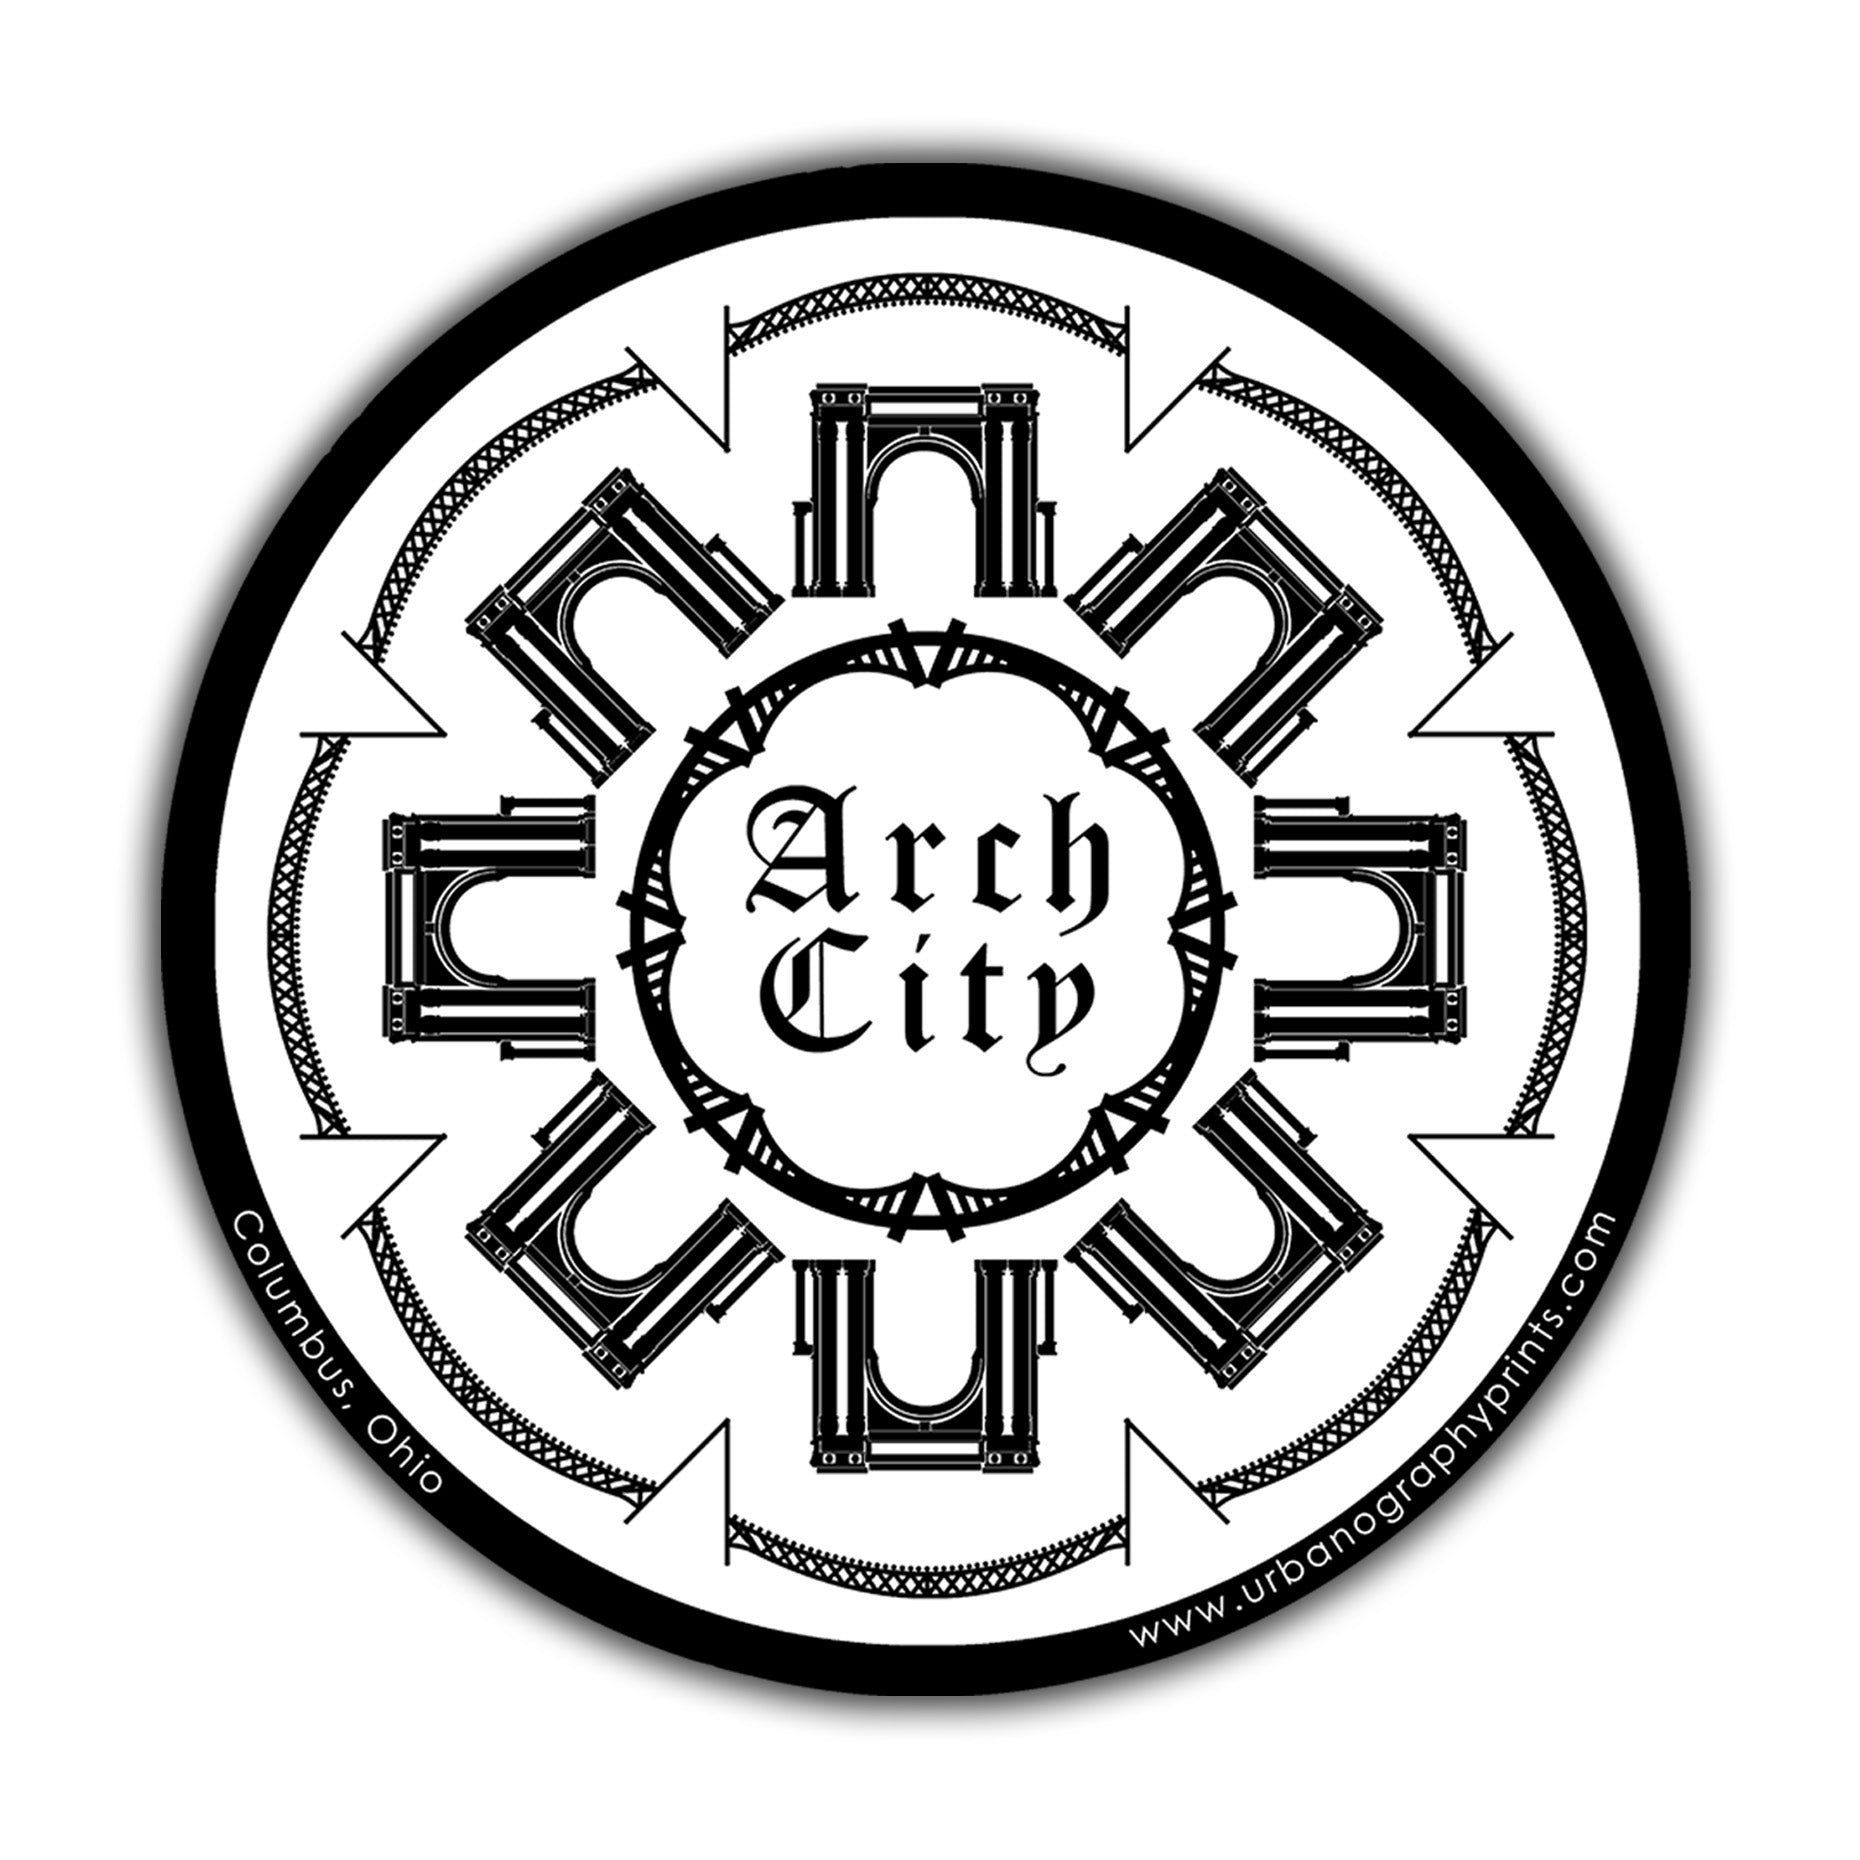 Arch City Sticker